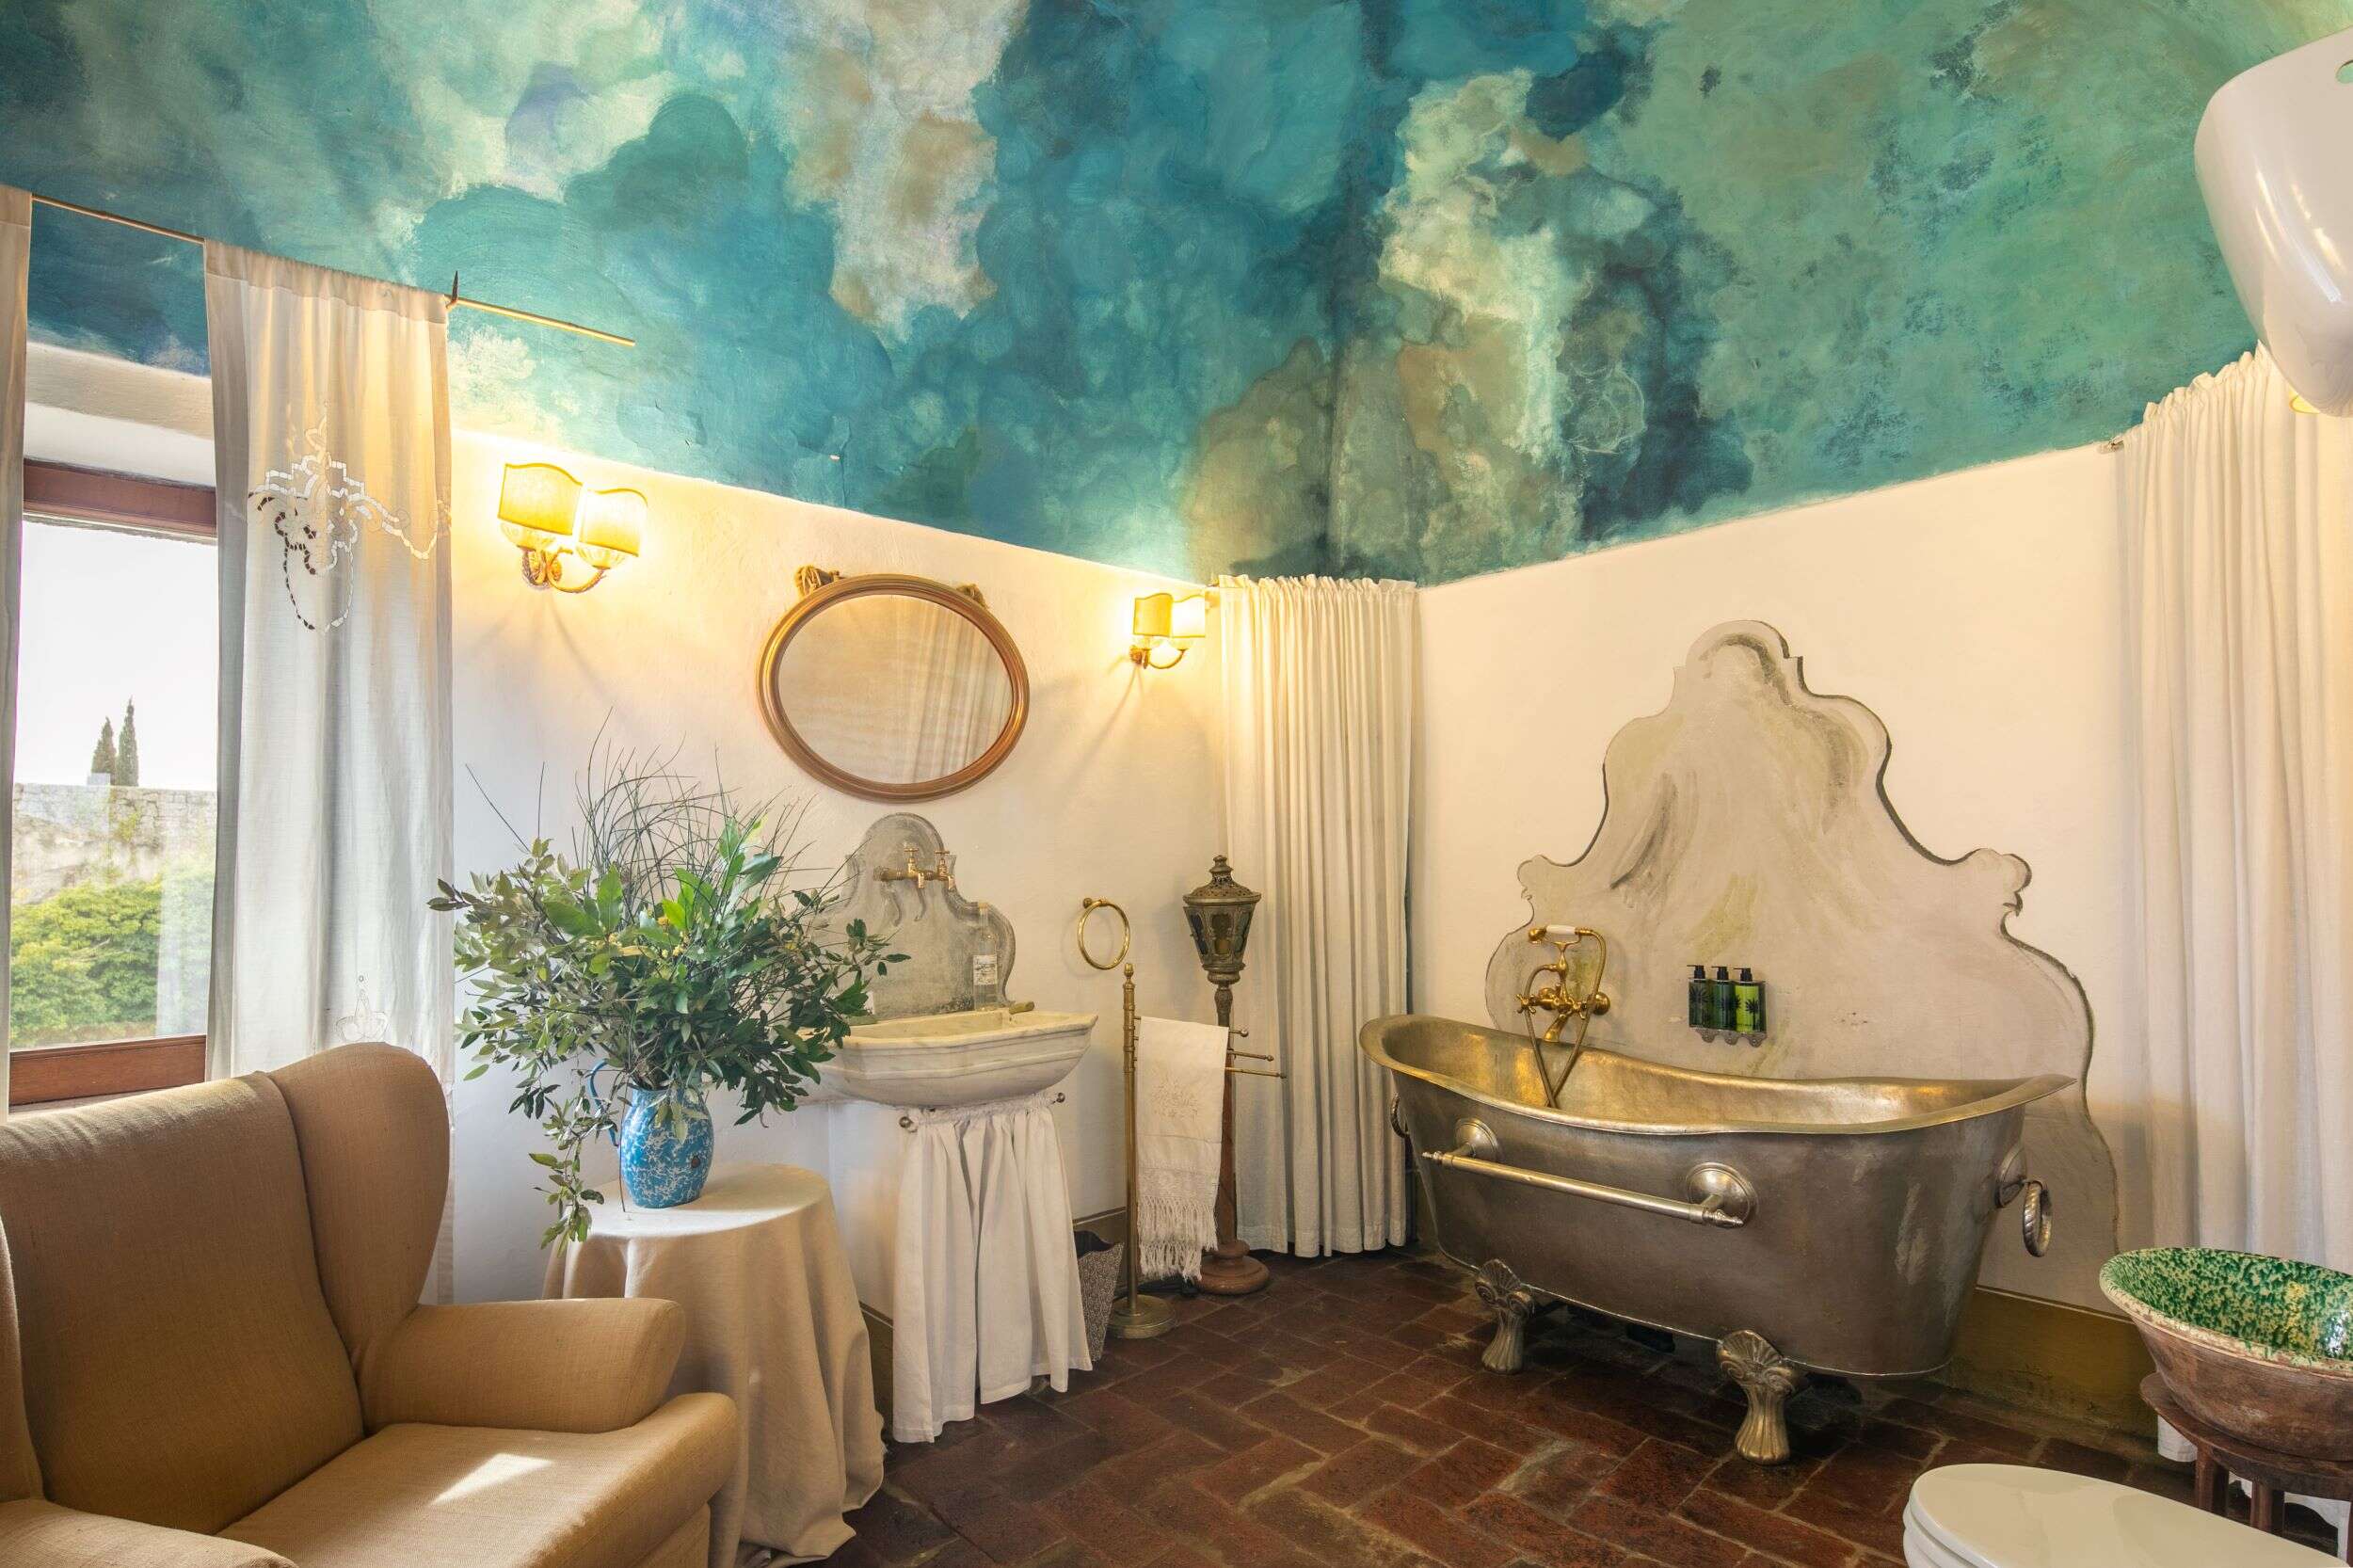 A bathroom of the Tuscan villa